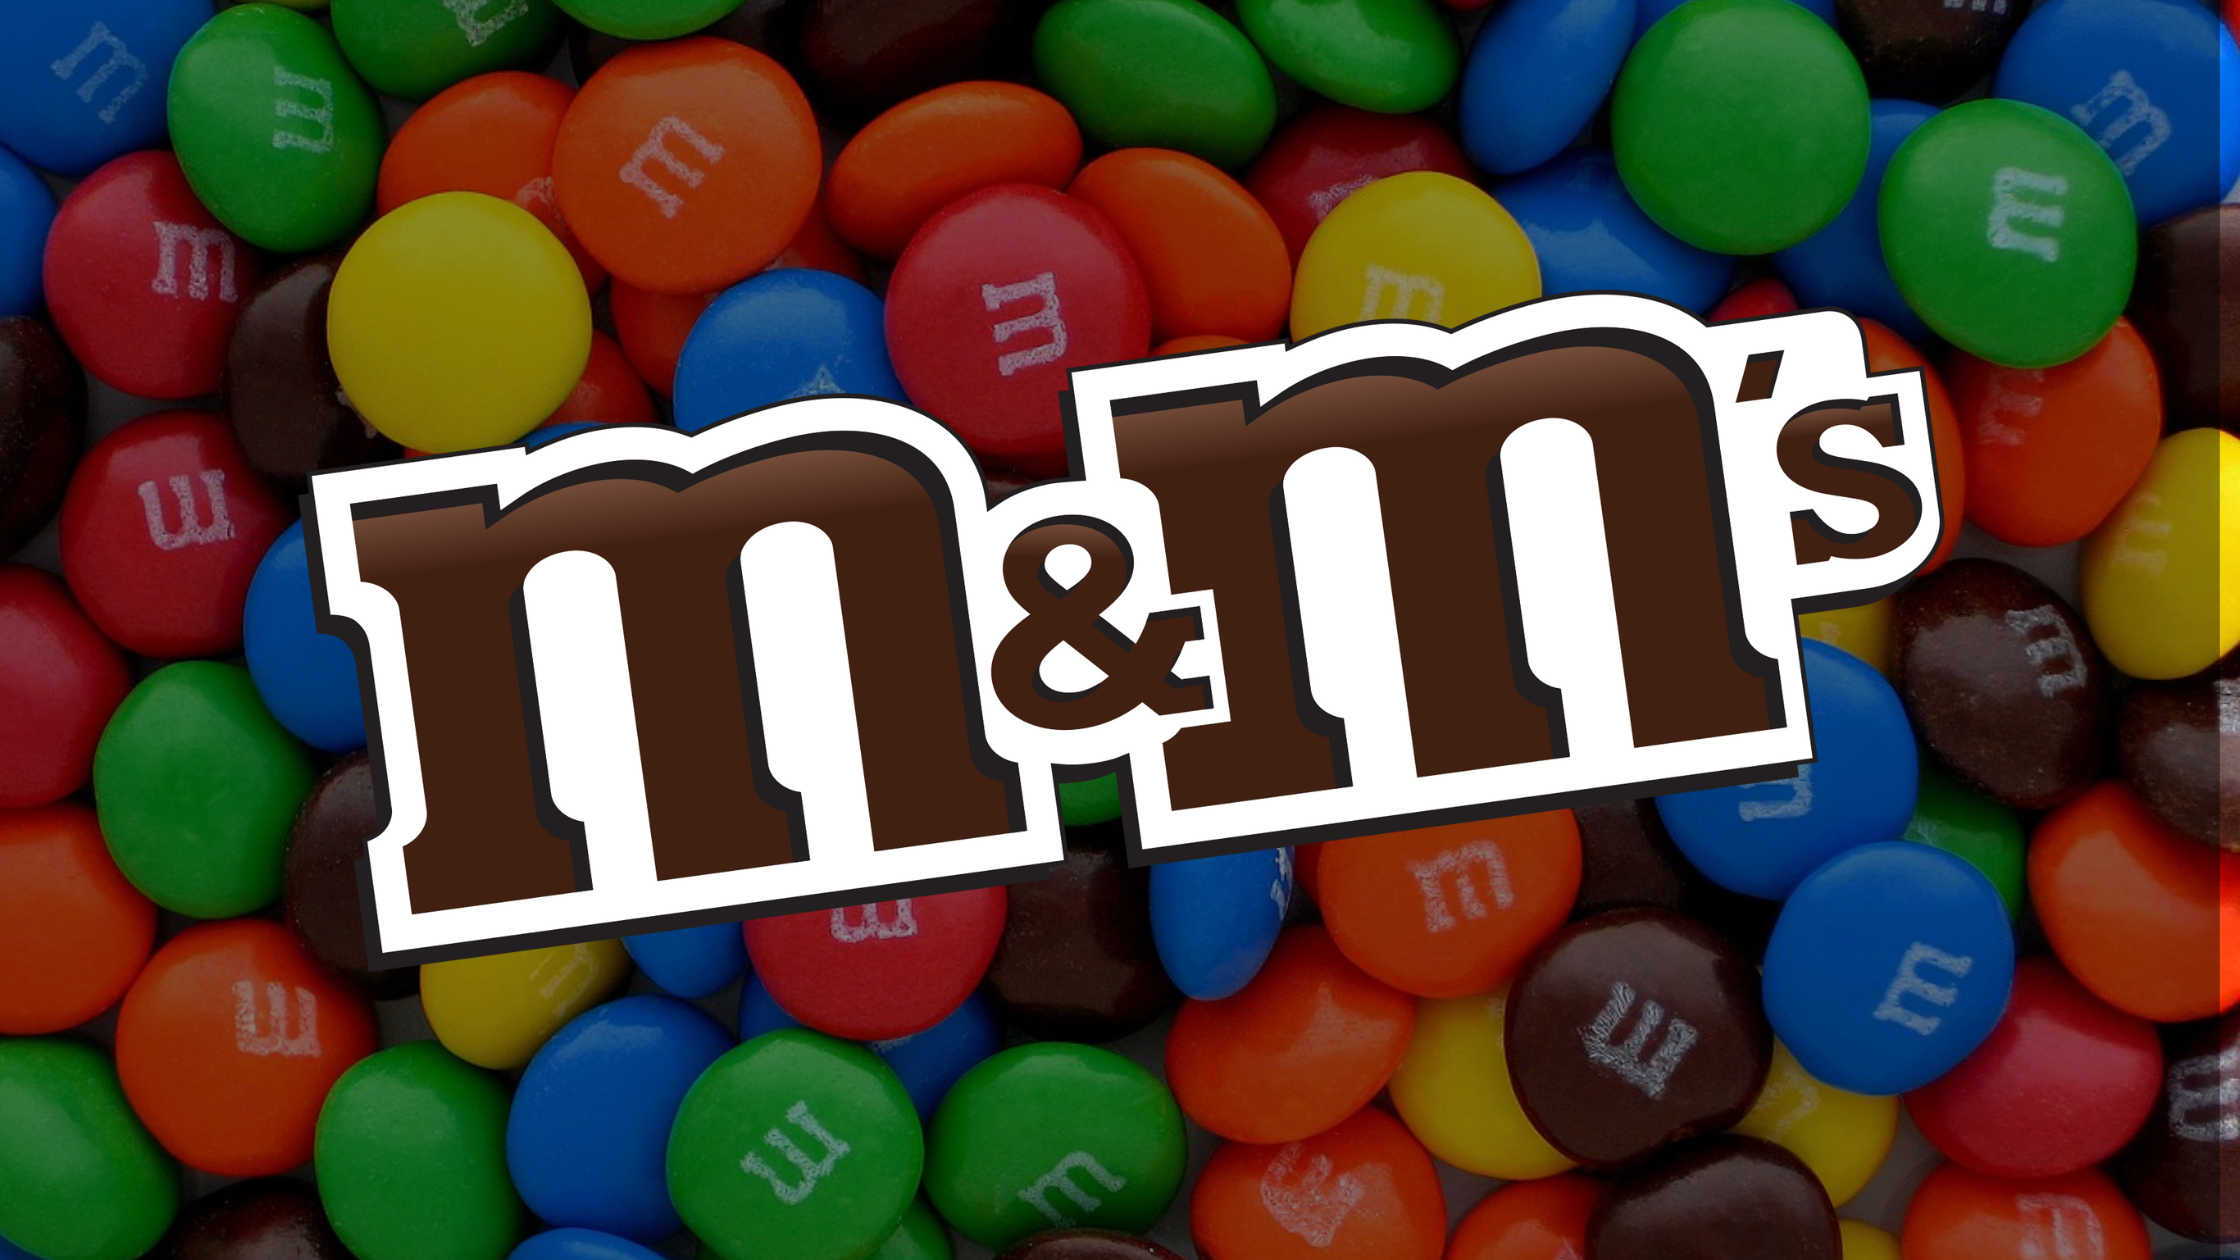 Crunchy Mint M&M's Candy: 8-Ounce Bag